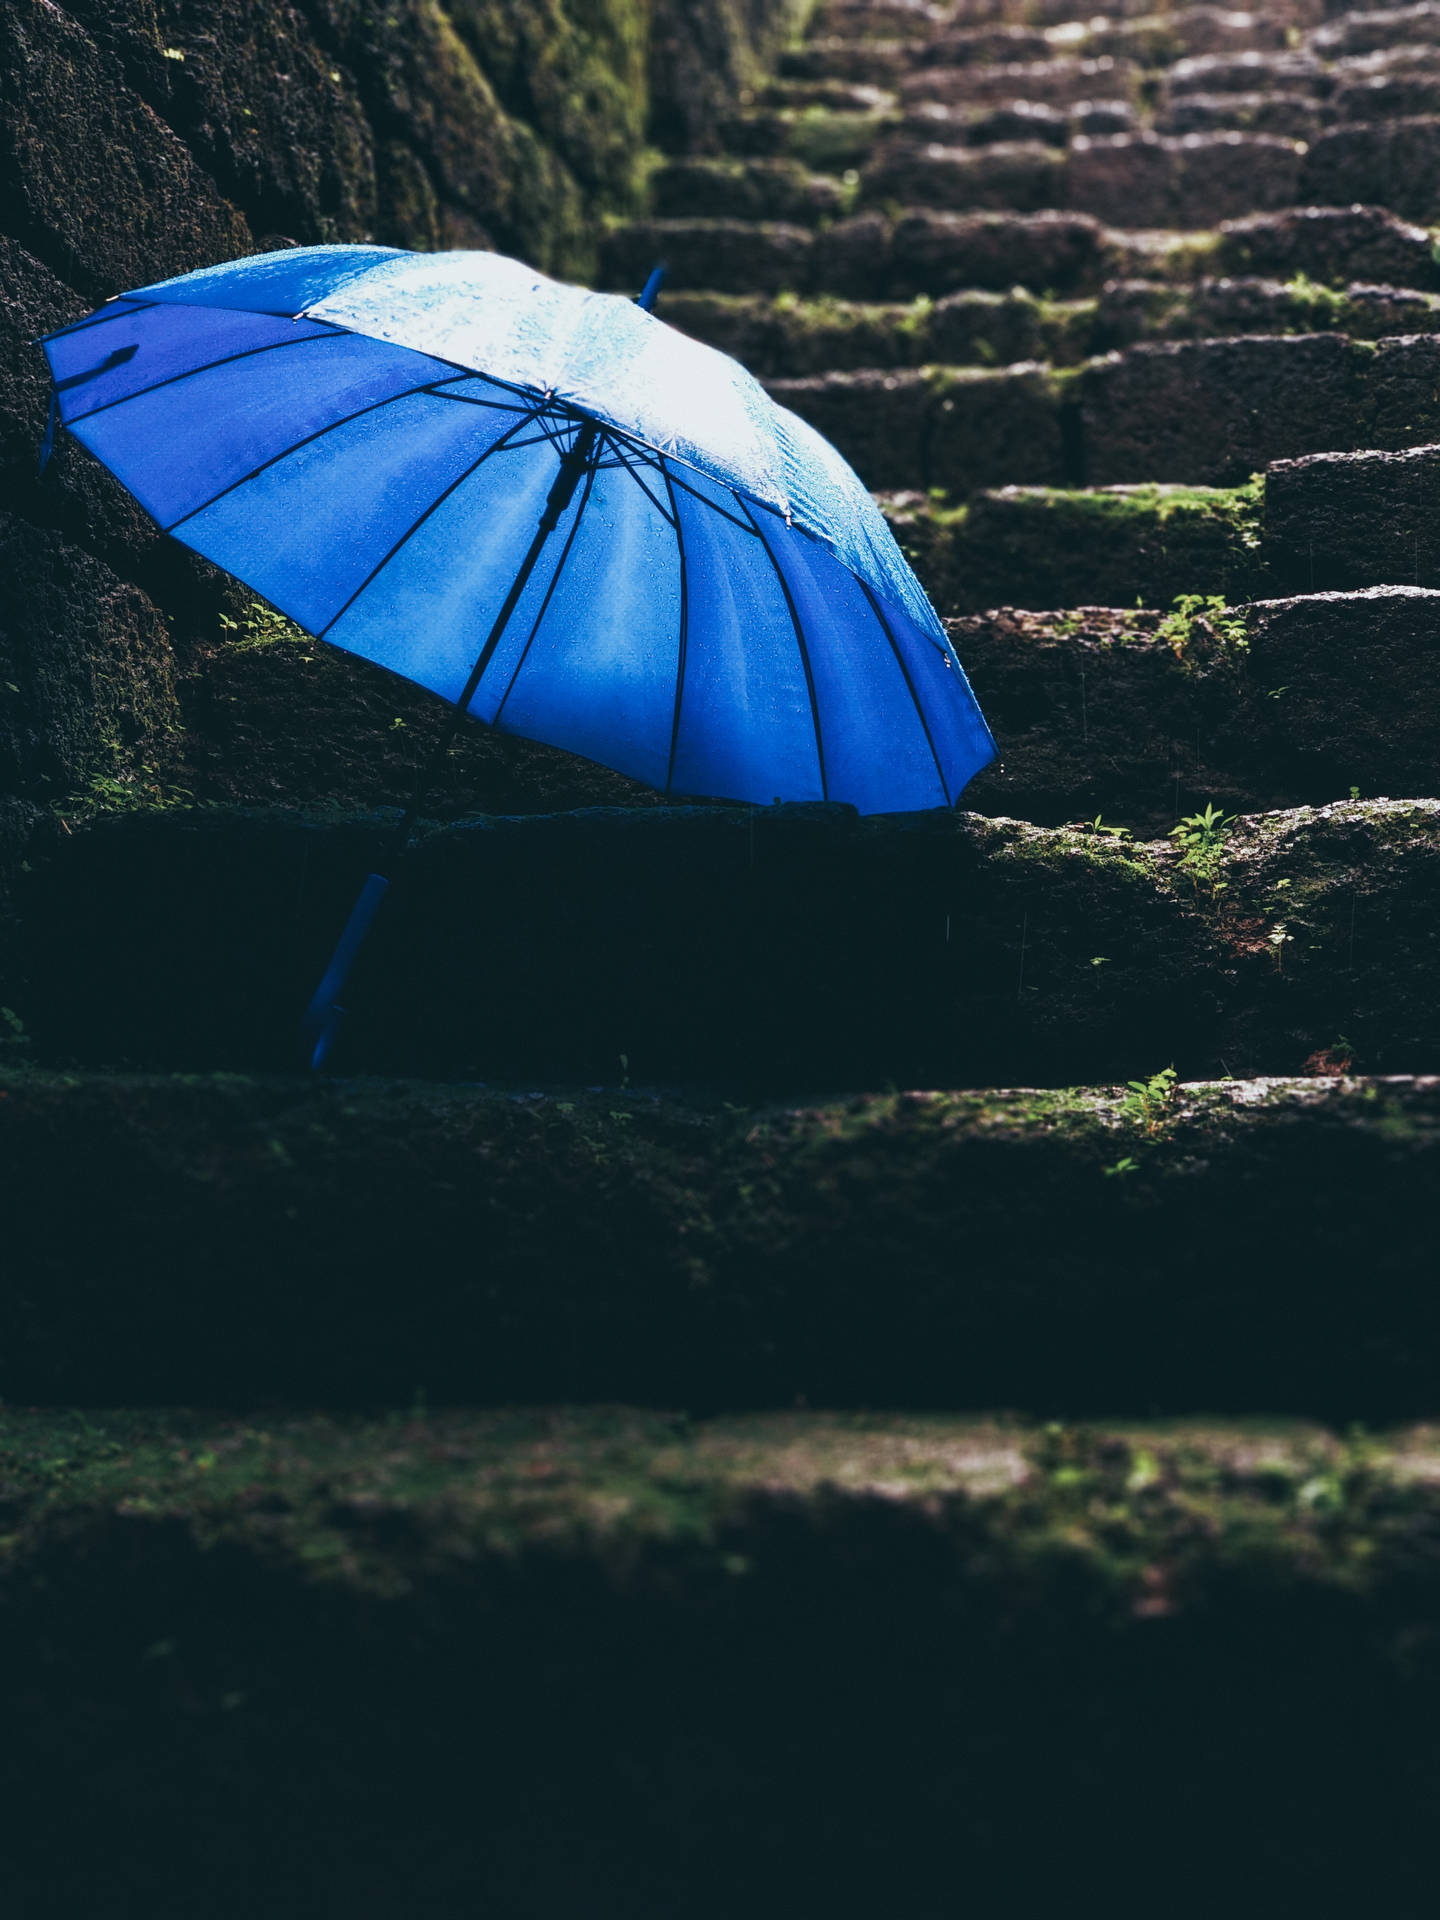 Rain Nature Blue Umbrella Background